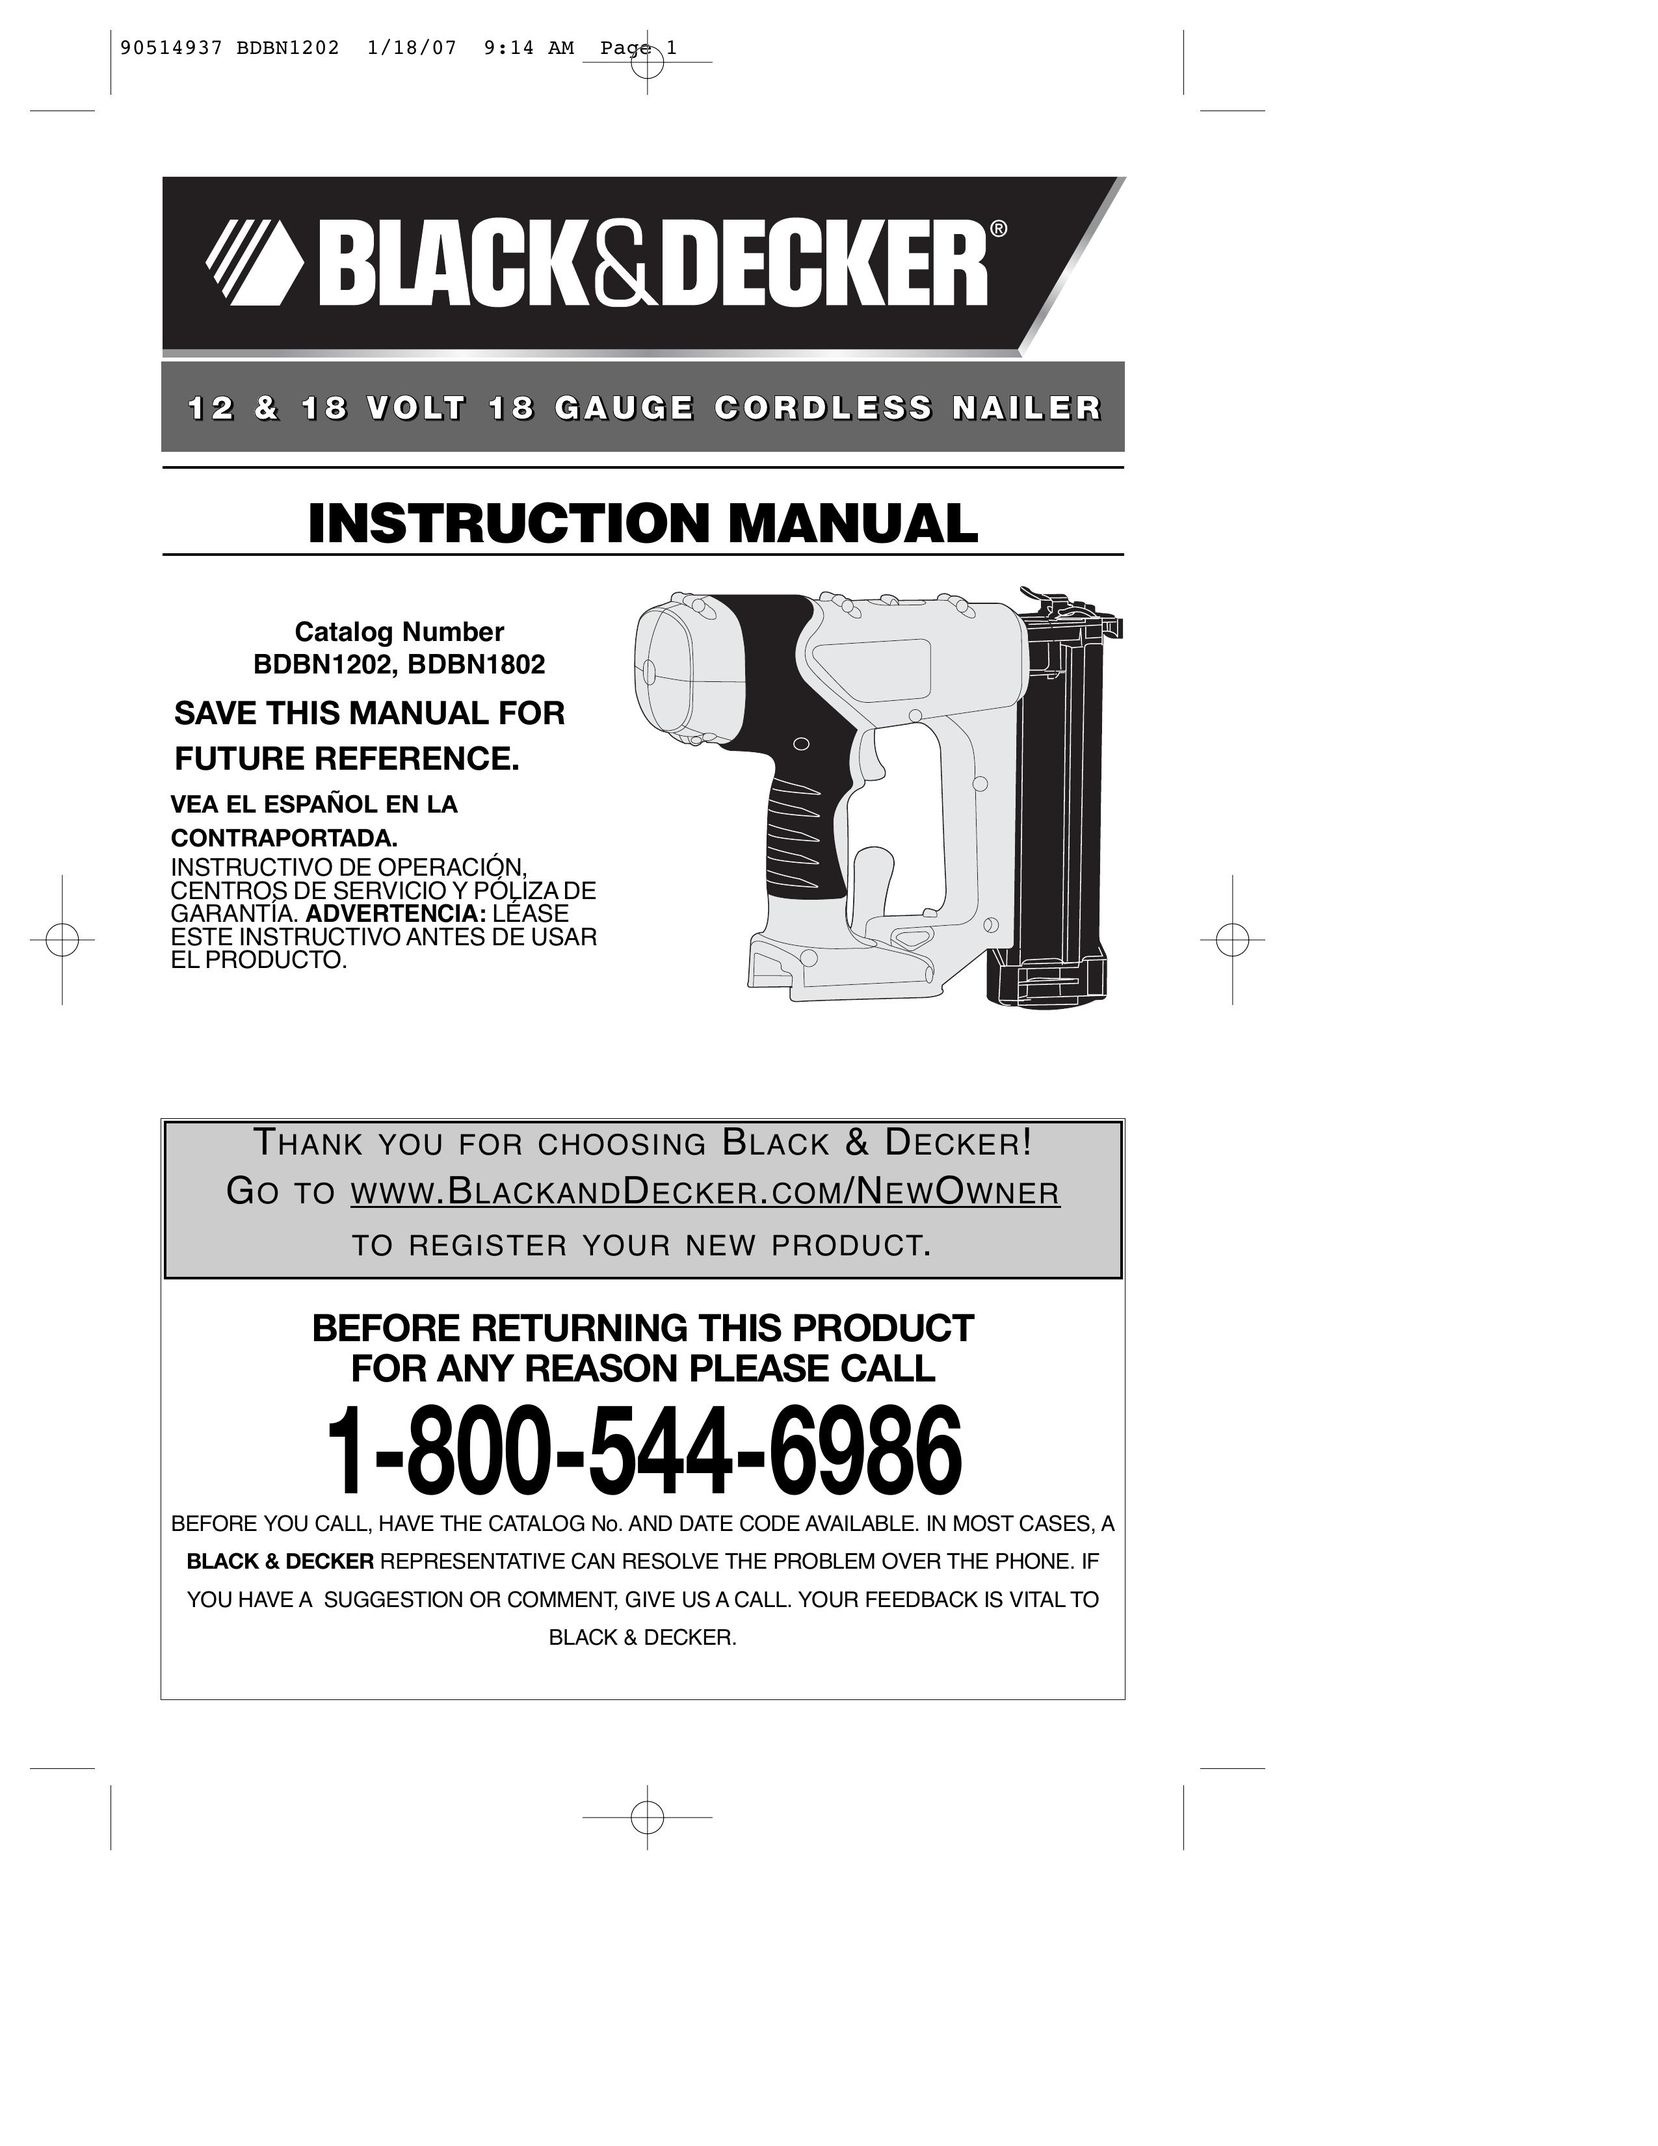 Black & Decker BDBN1802 Nail Gun User Manual